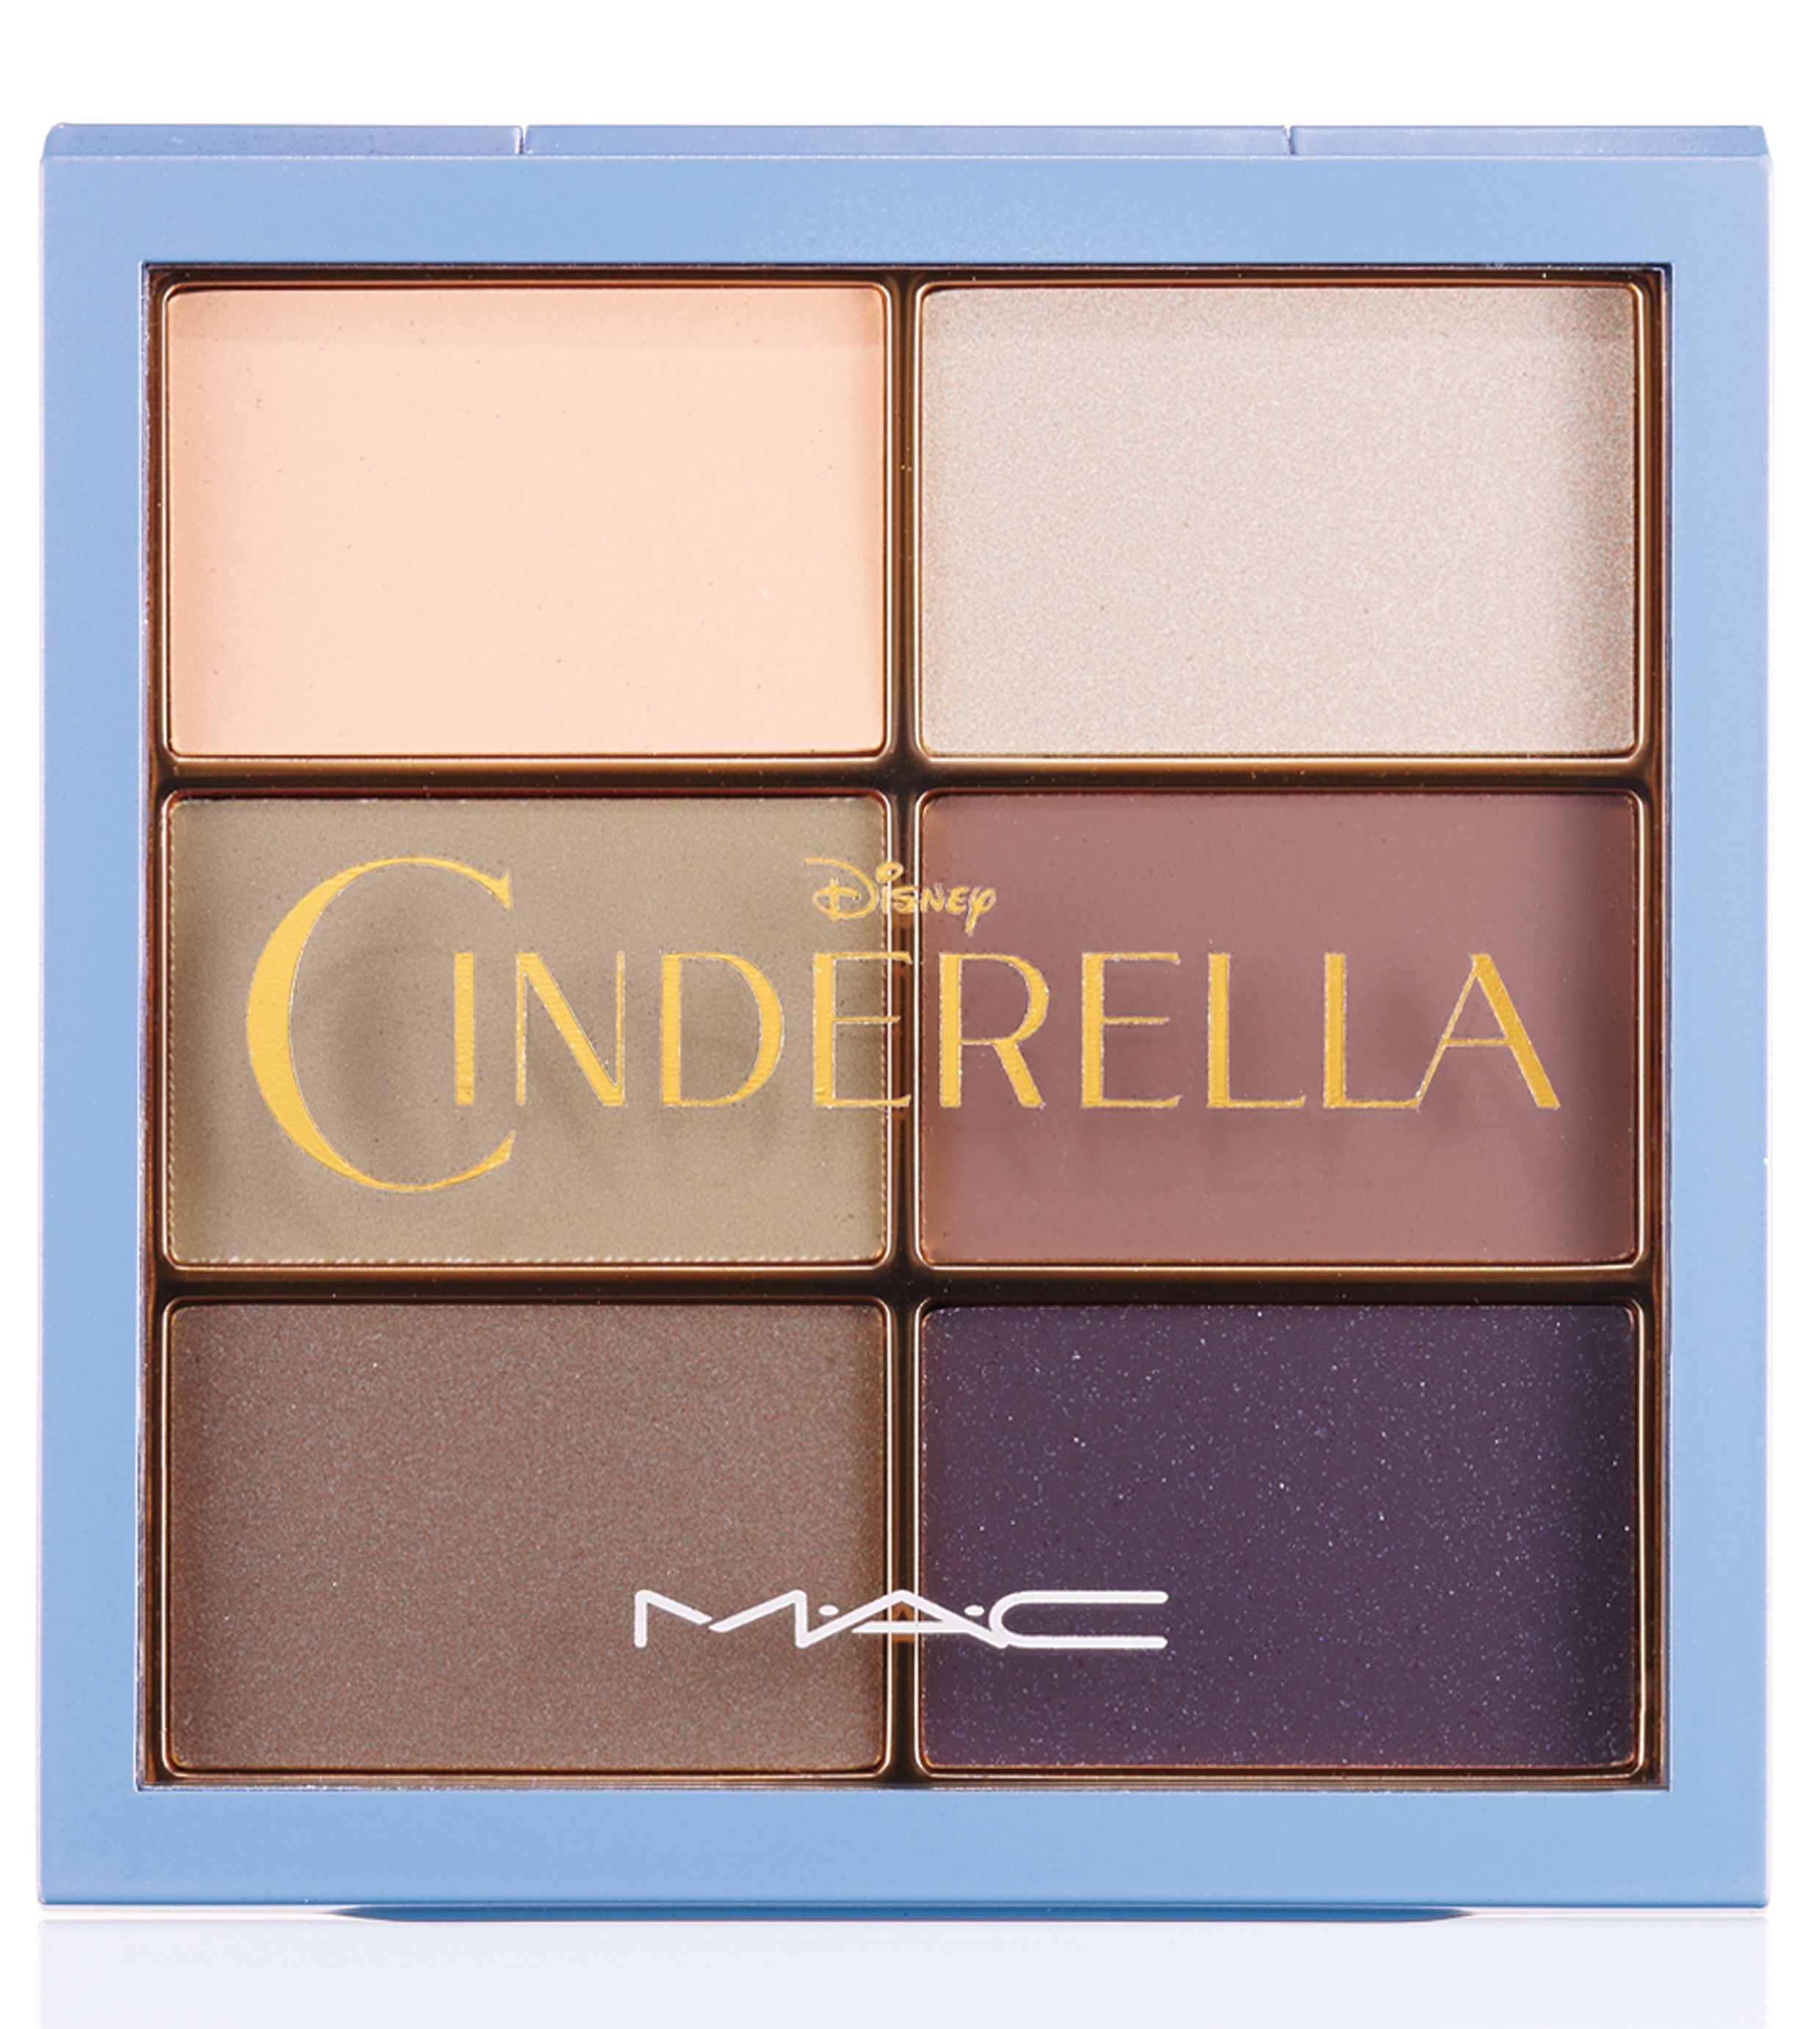 Introducing M.A.C Cinderella... A Collection As Pretty As A Princess!